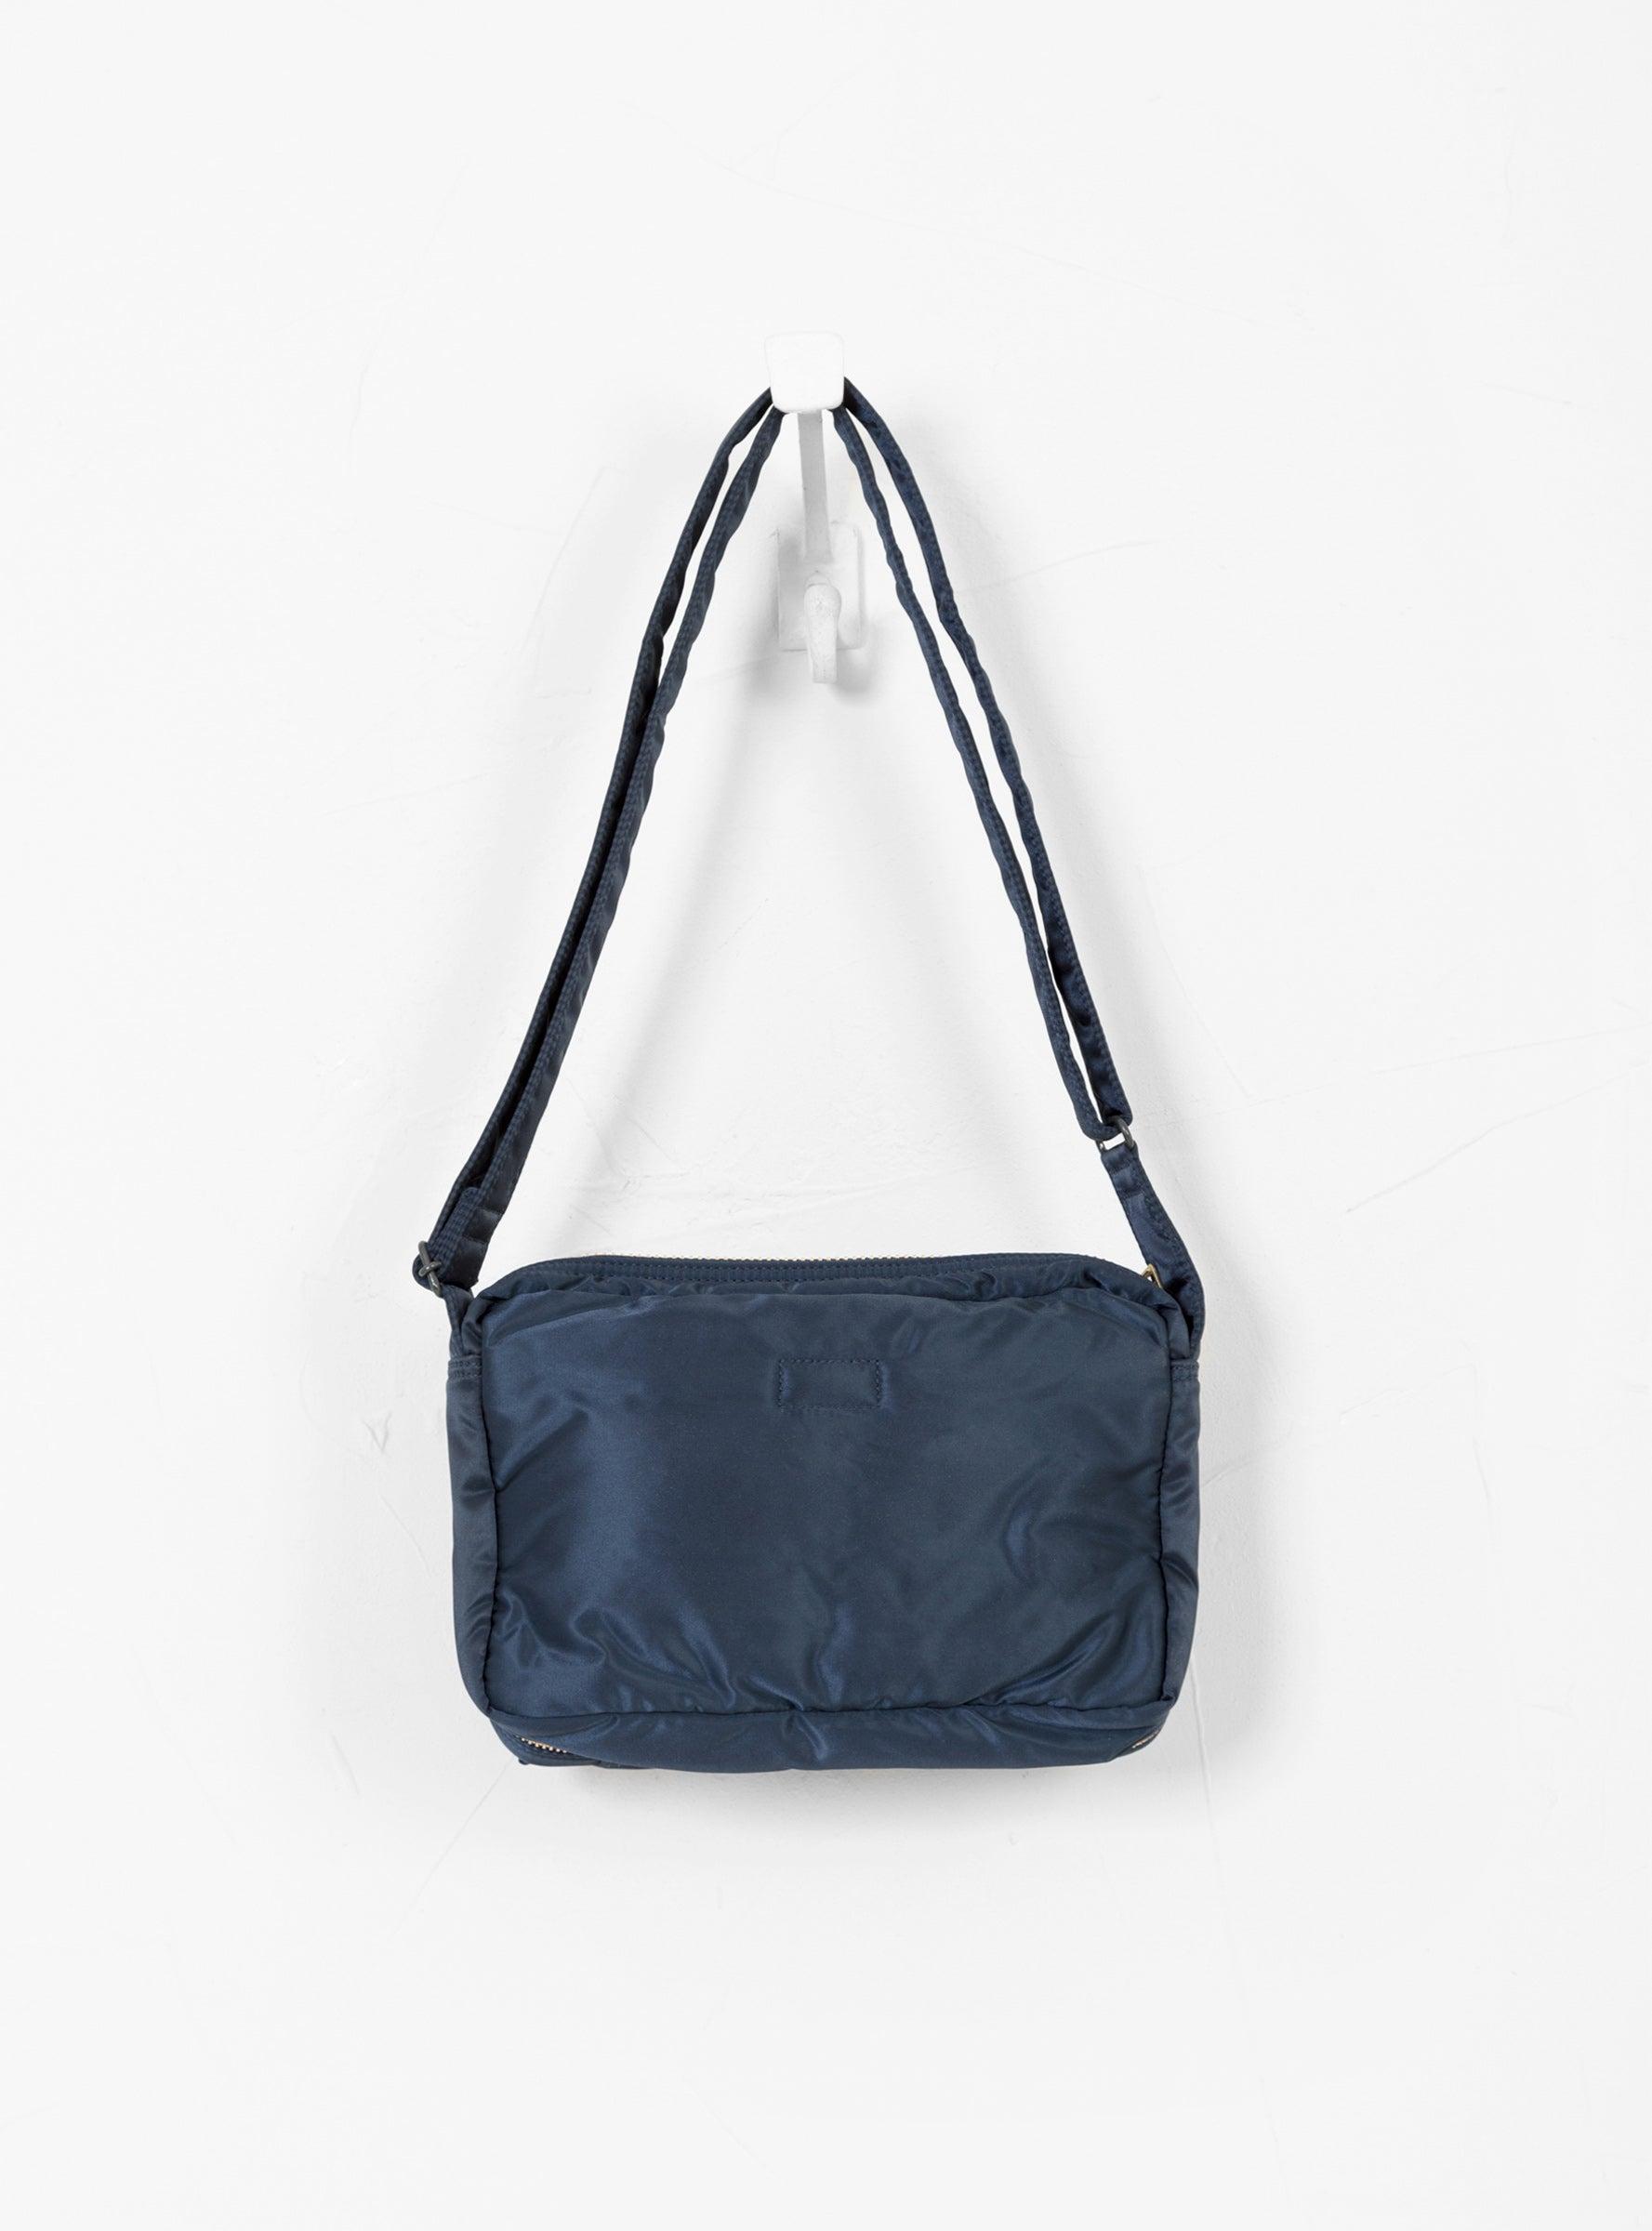 Porter-Yoshida and Co Women's Tanker Shoulder Bag Small Iron Blue